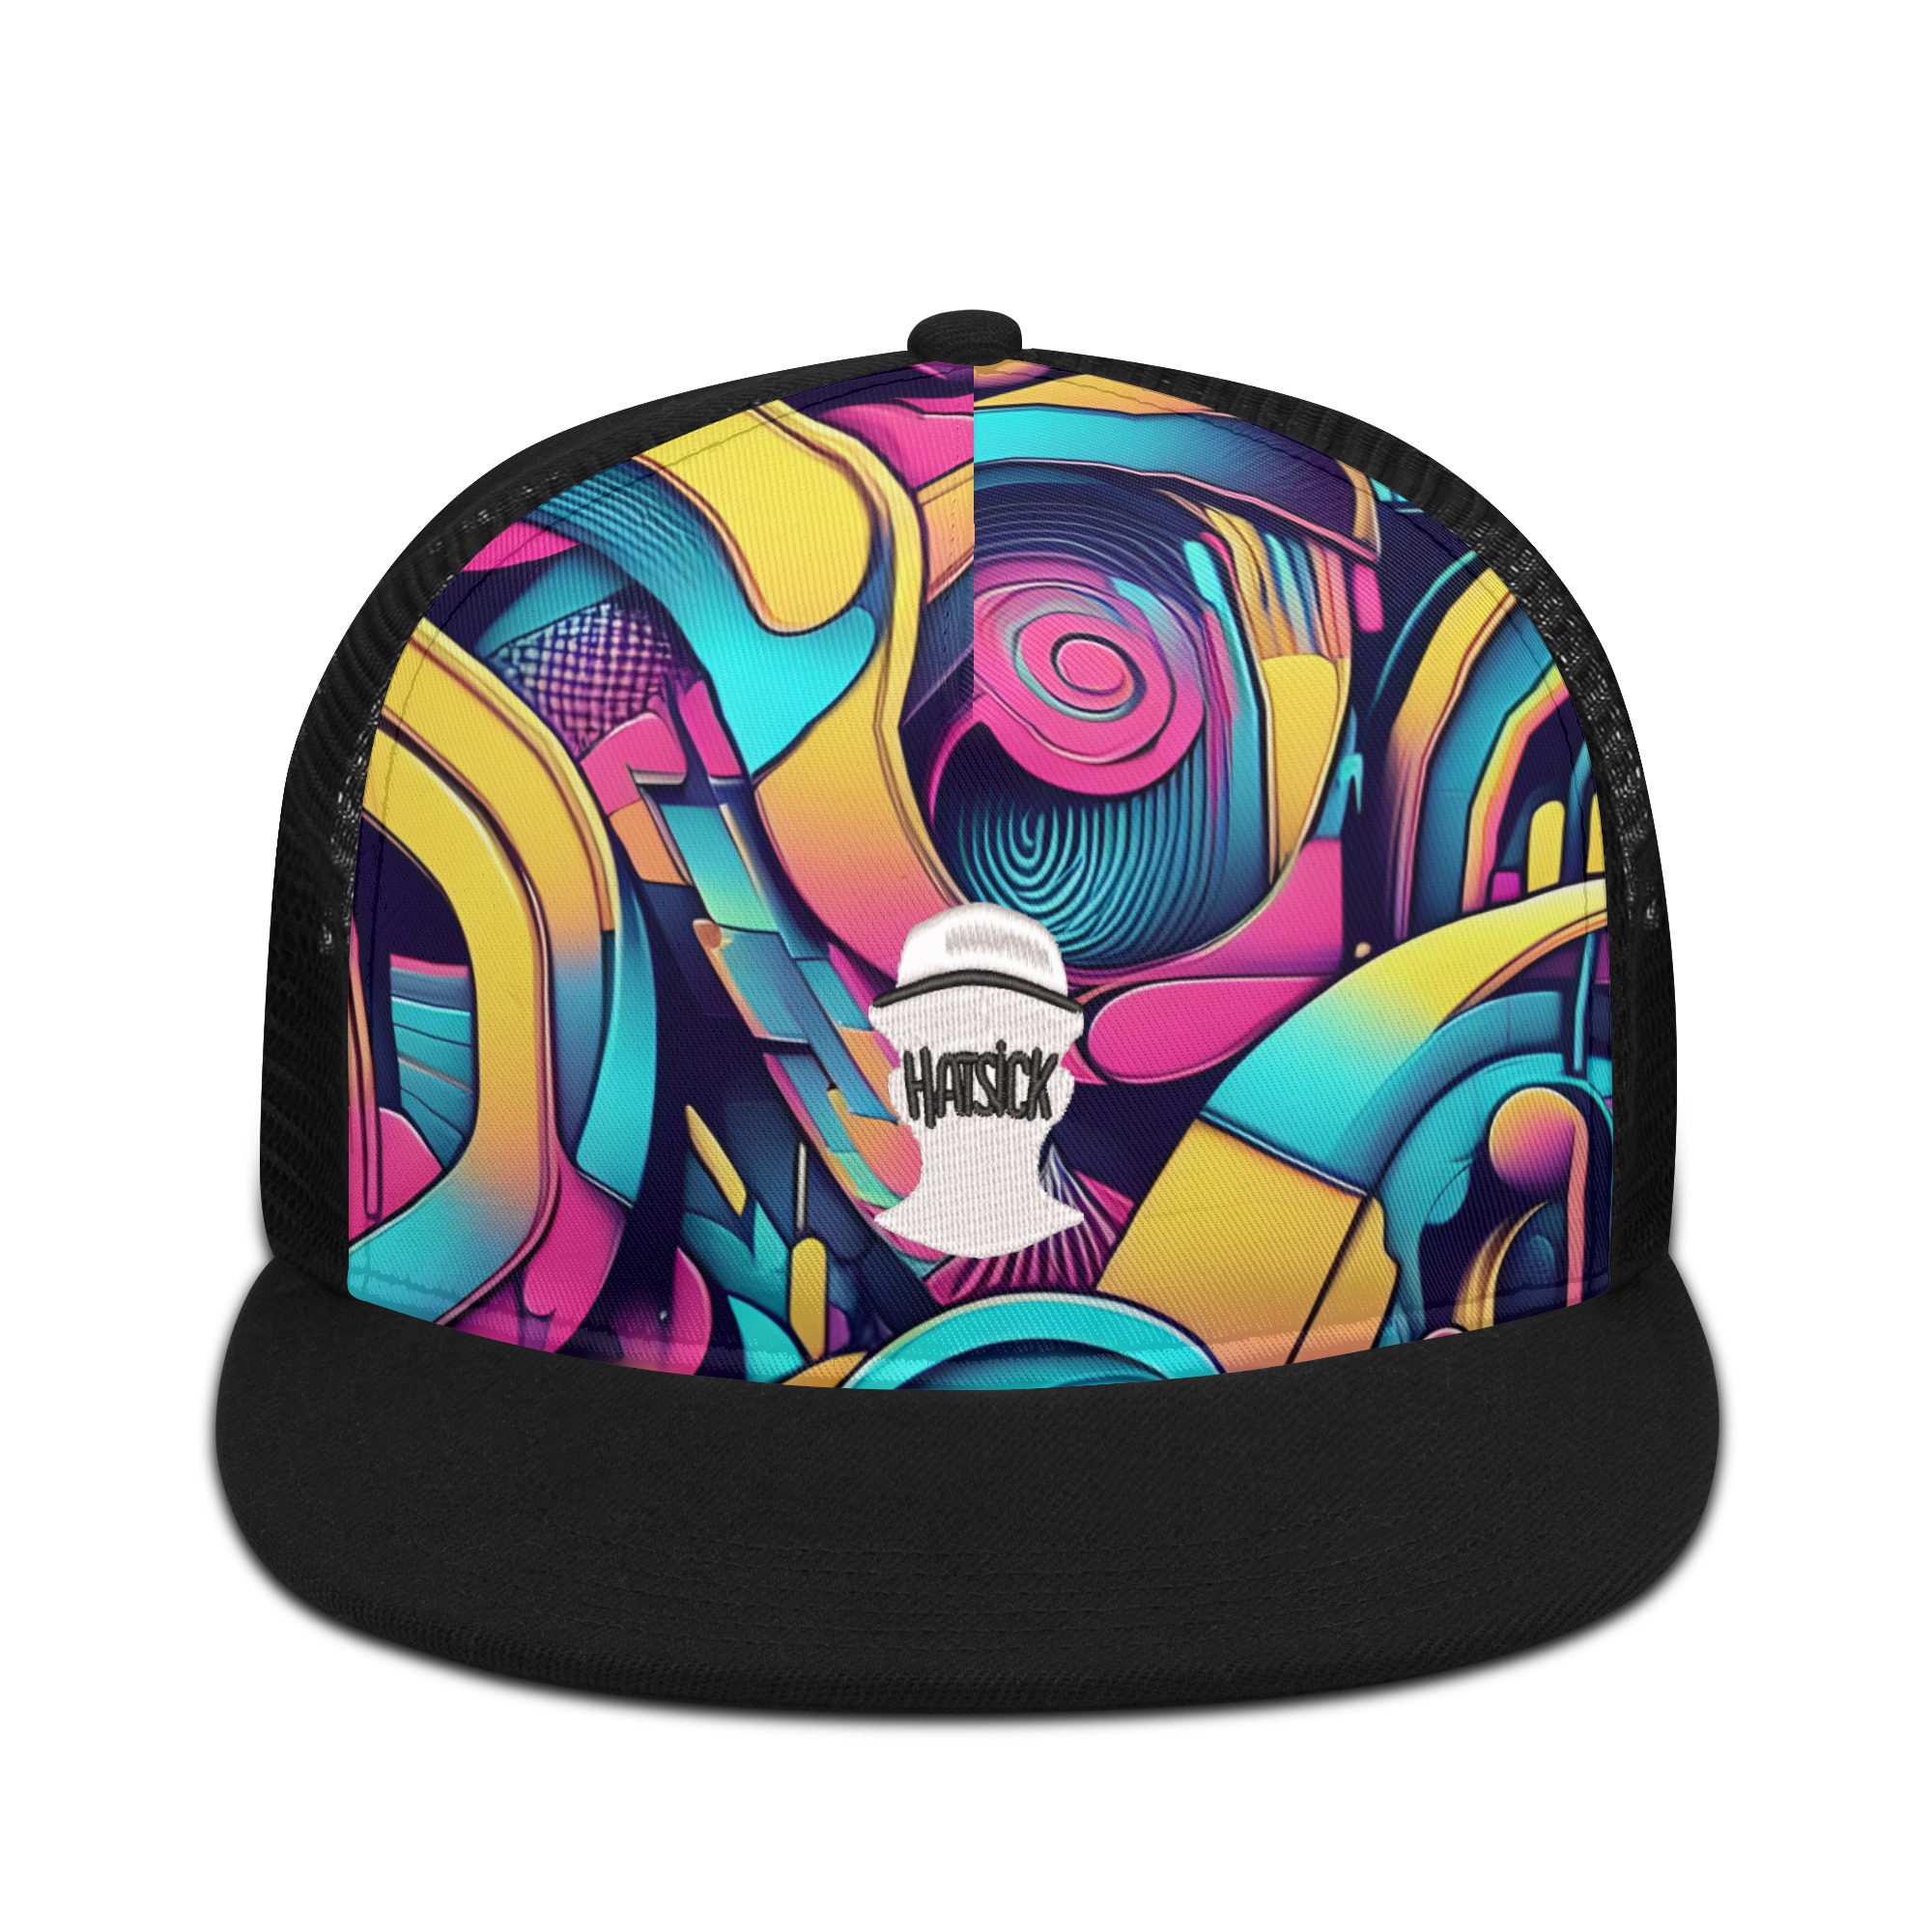 H-Graffite Mesh Hip-hop Hats